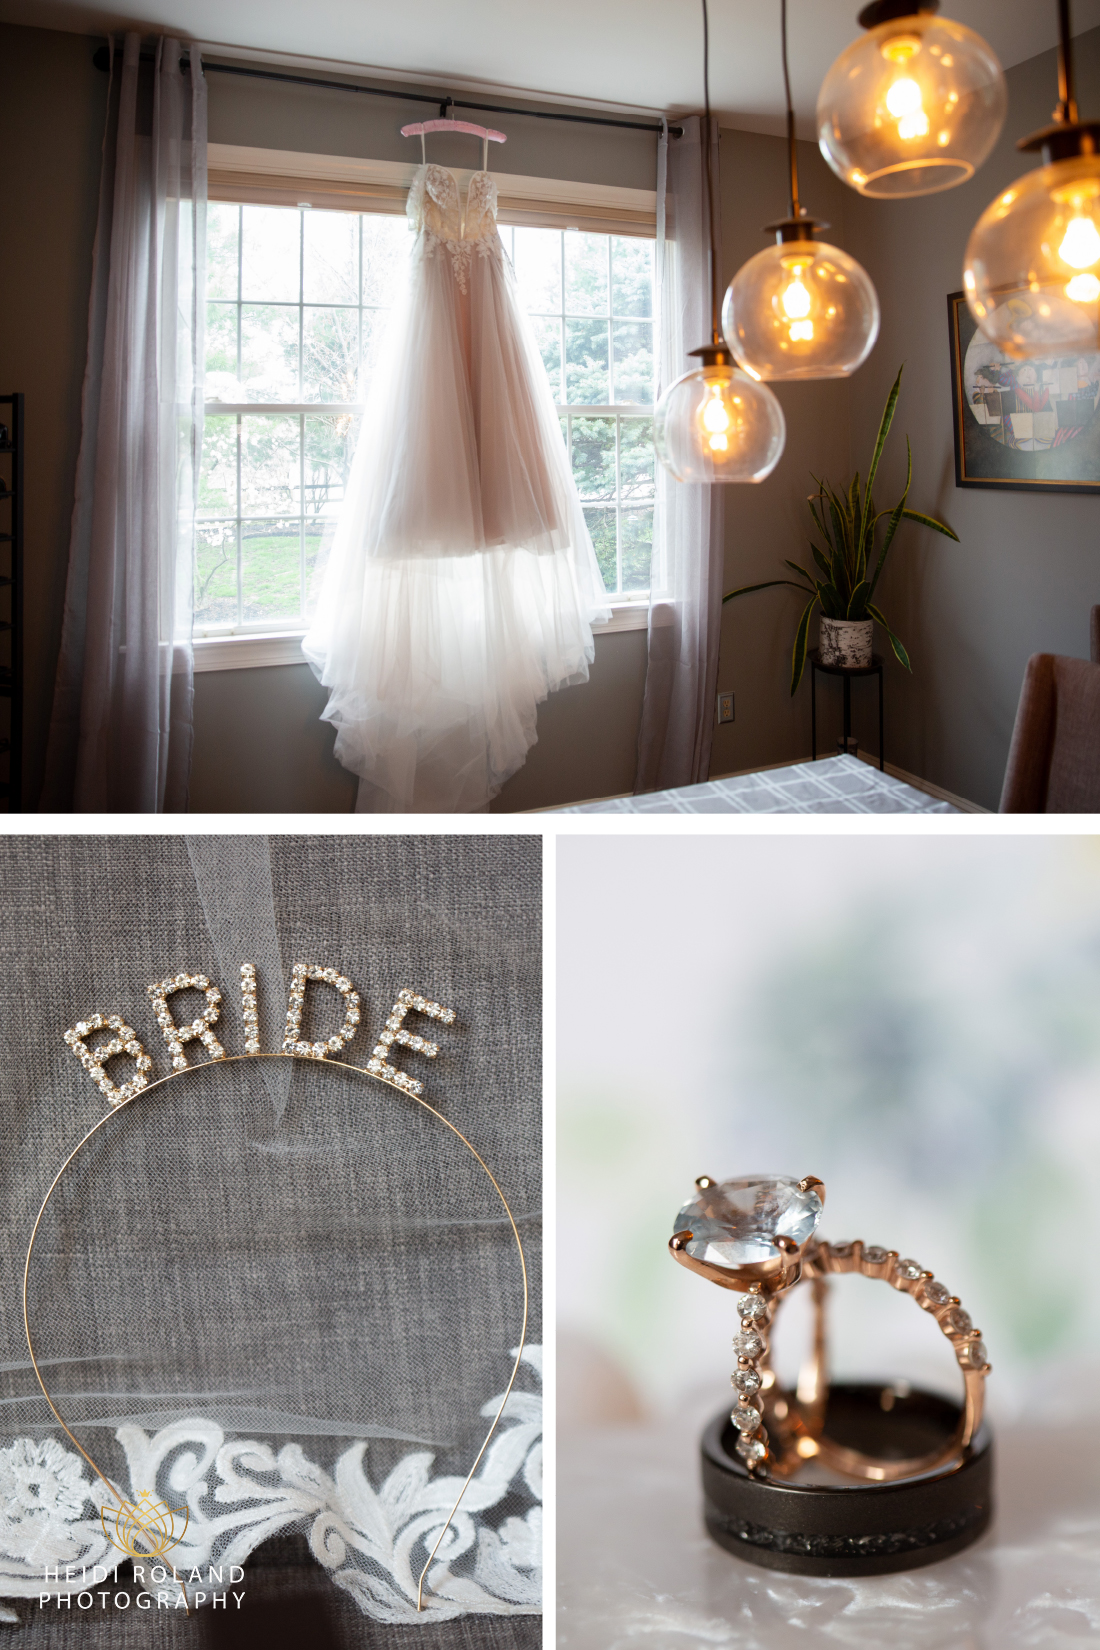 Bridal details with wedding dress, bride tiara and wedding rings